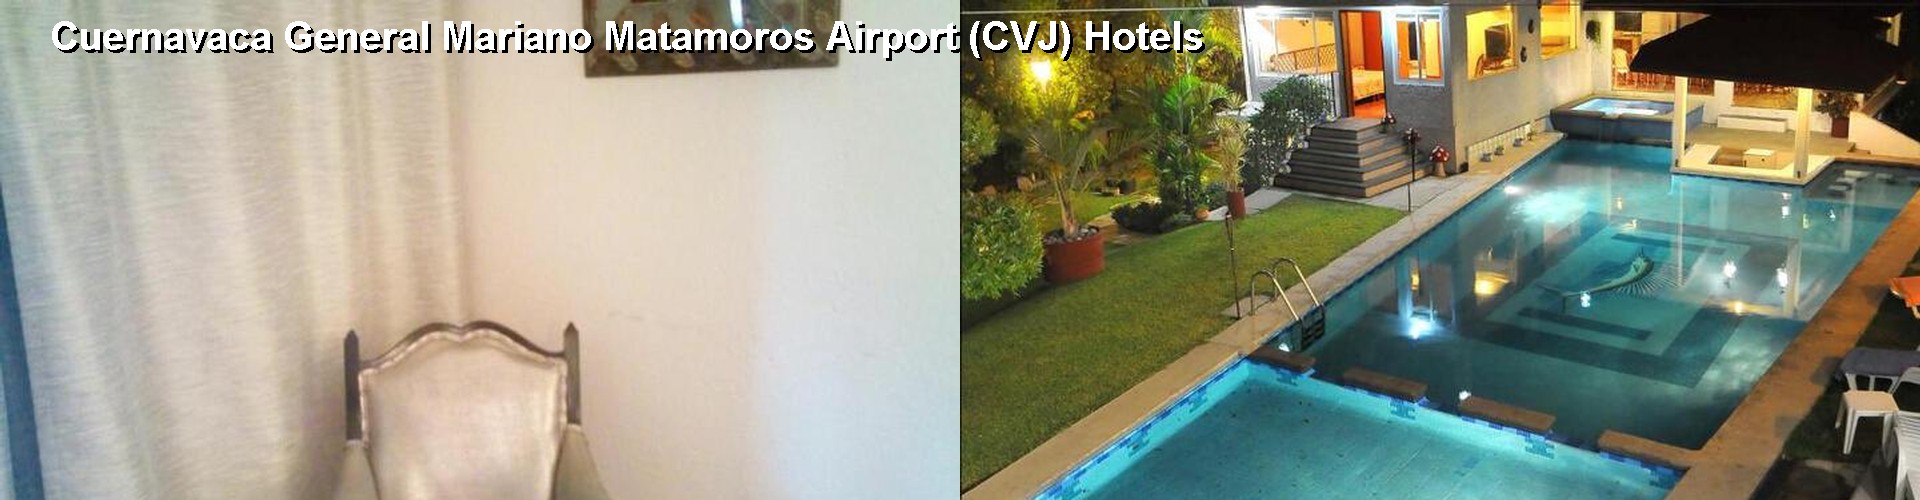 5 Best Hotels near Cuernavaca General Mariano Matamoros Airport (CVJ)